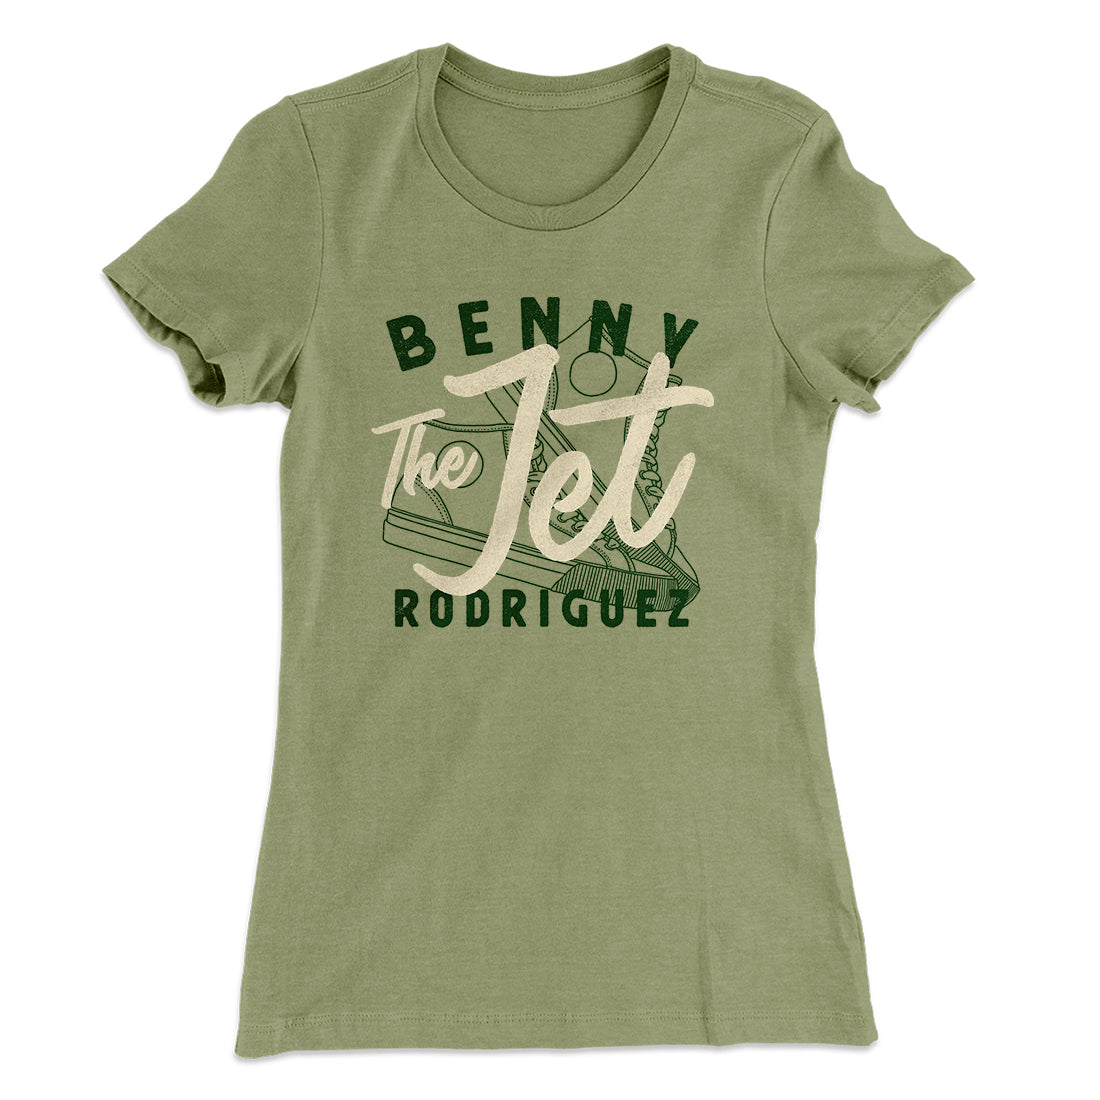 benny the jet rodriguez shirt